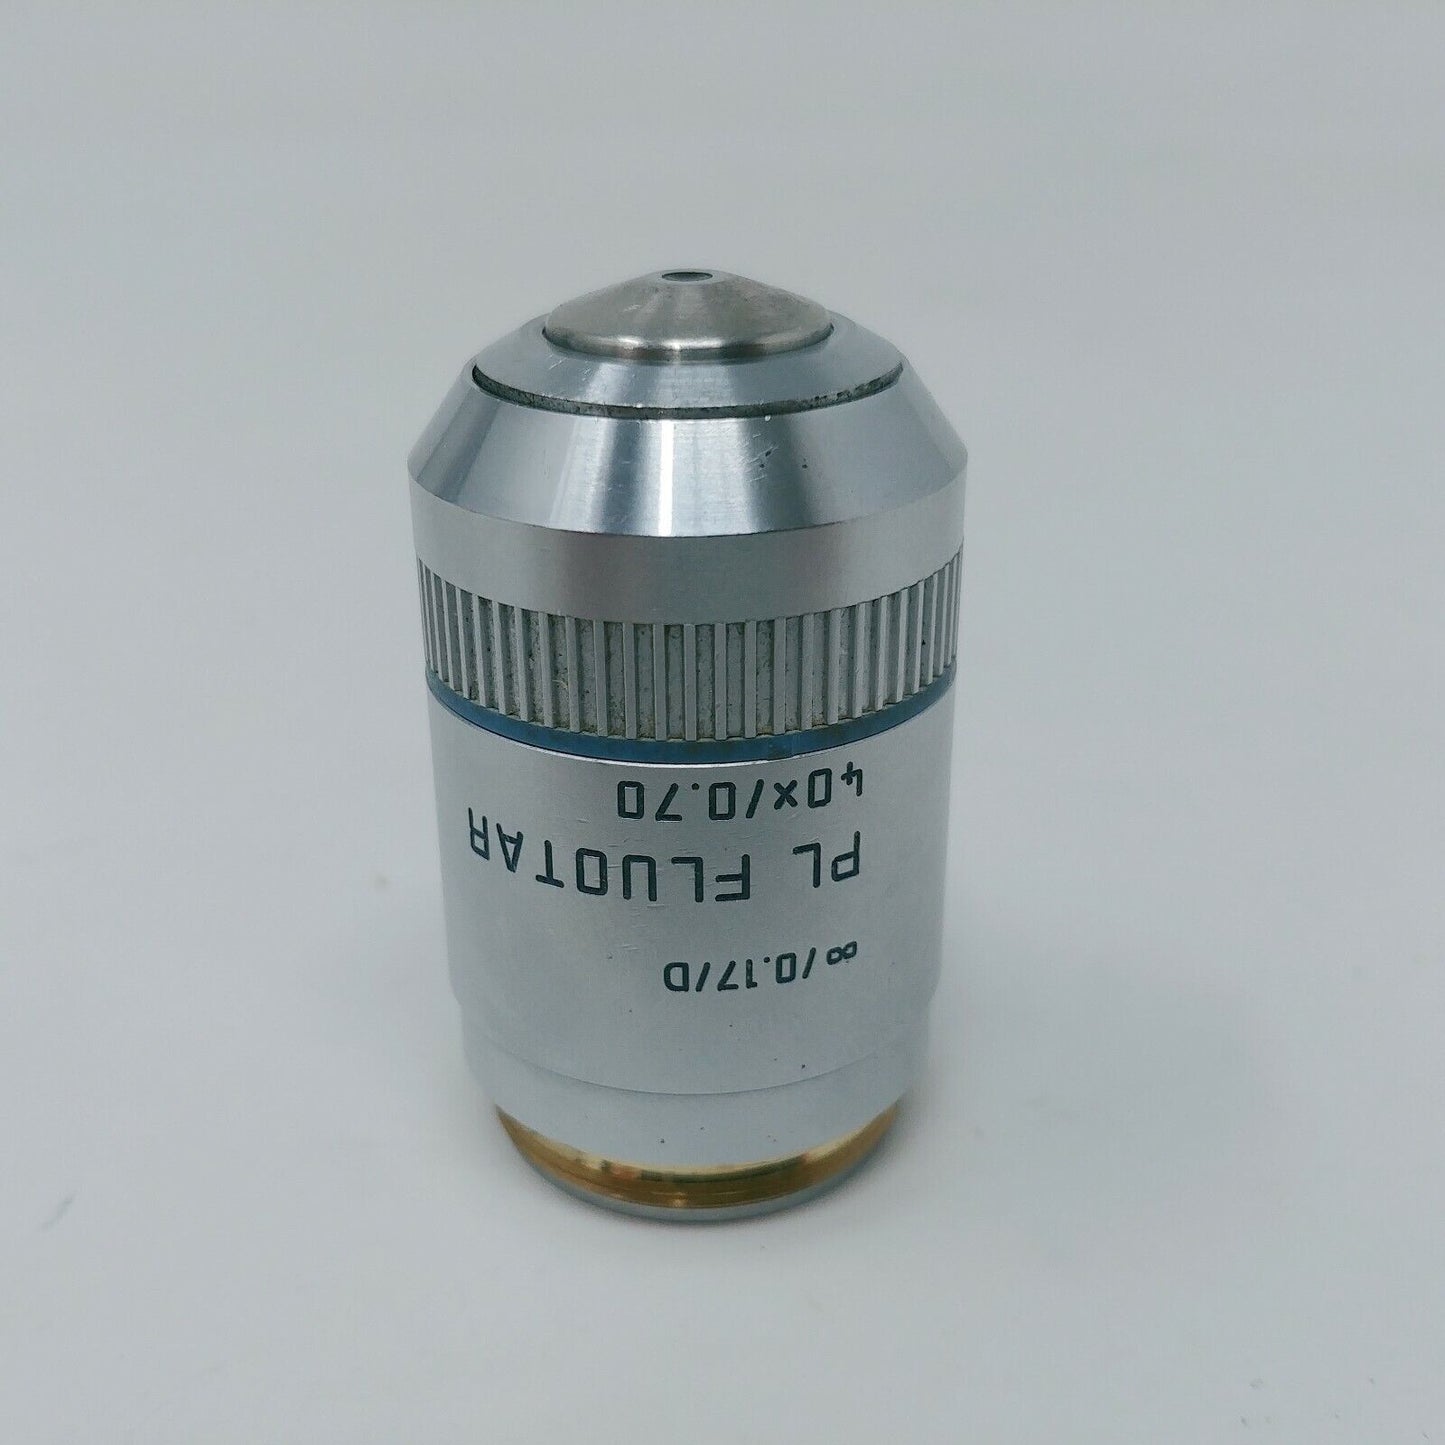 Leica Microscope Objective PL Fluotar 40x /0.70 506004 - microscopemarketplace